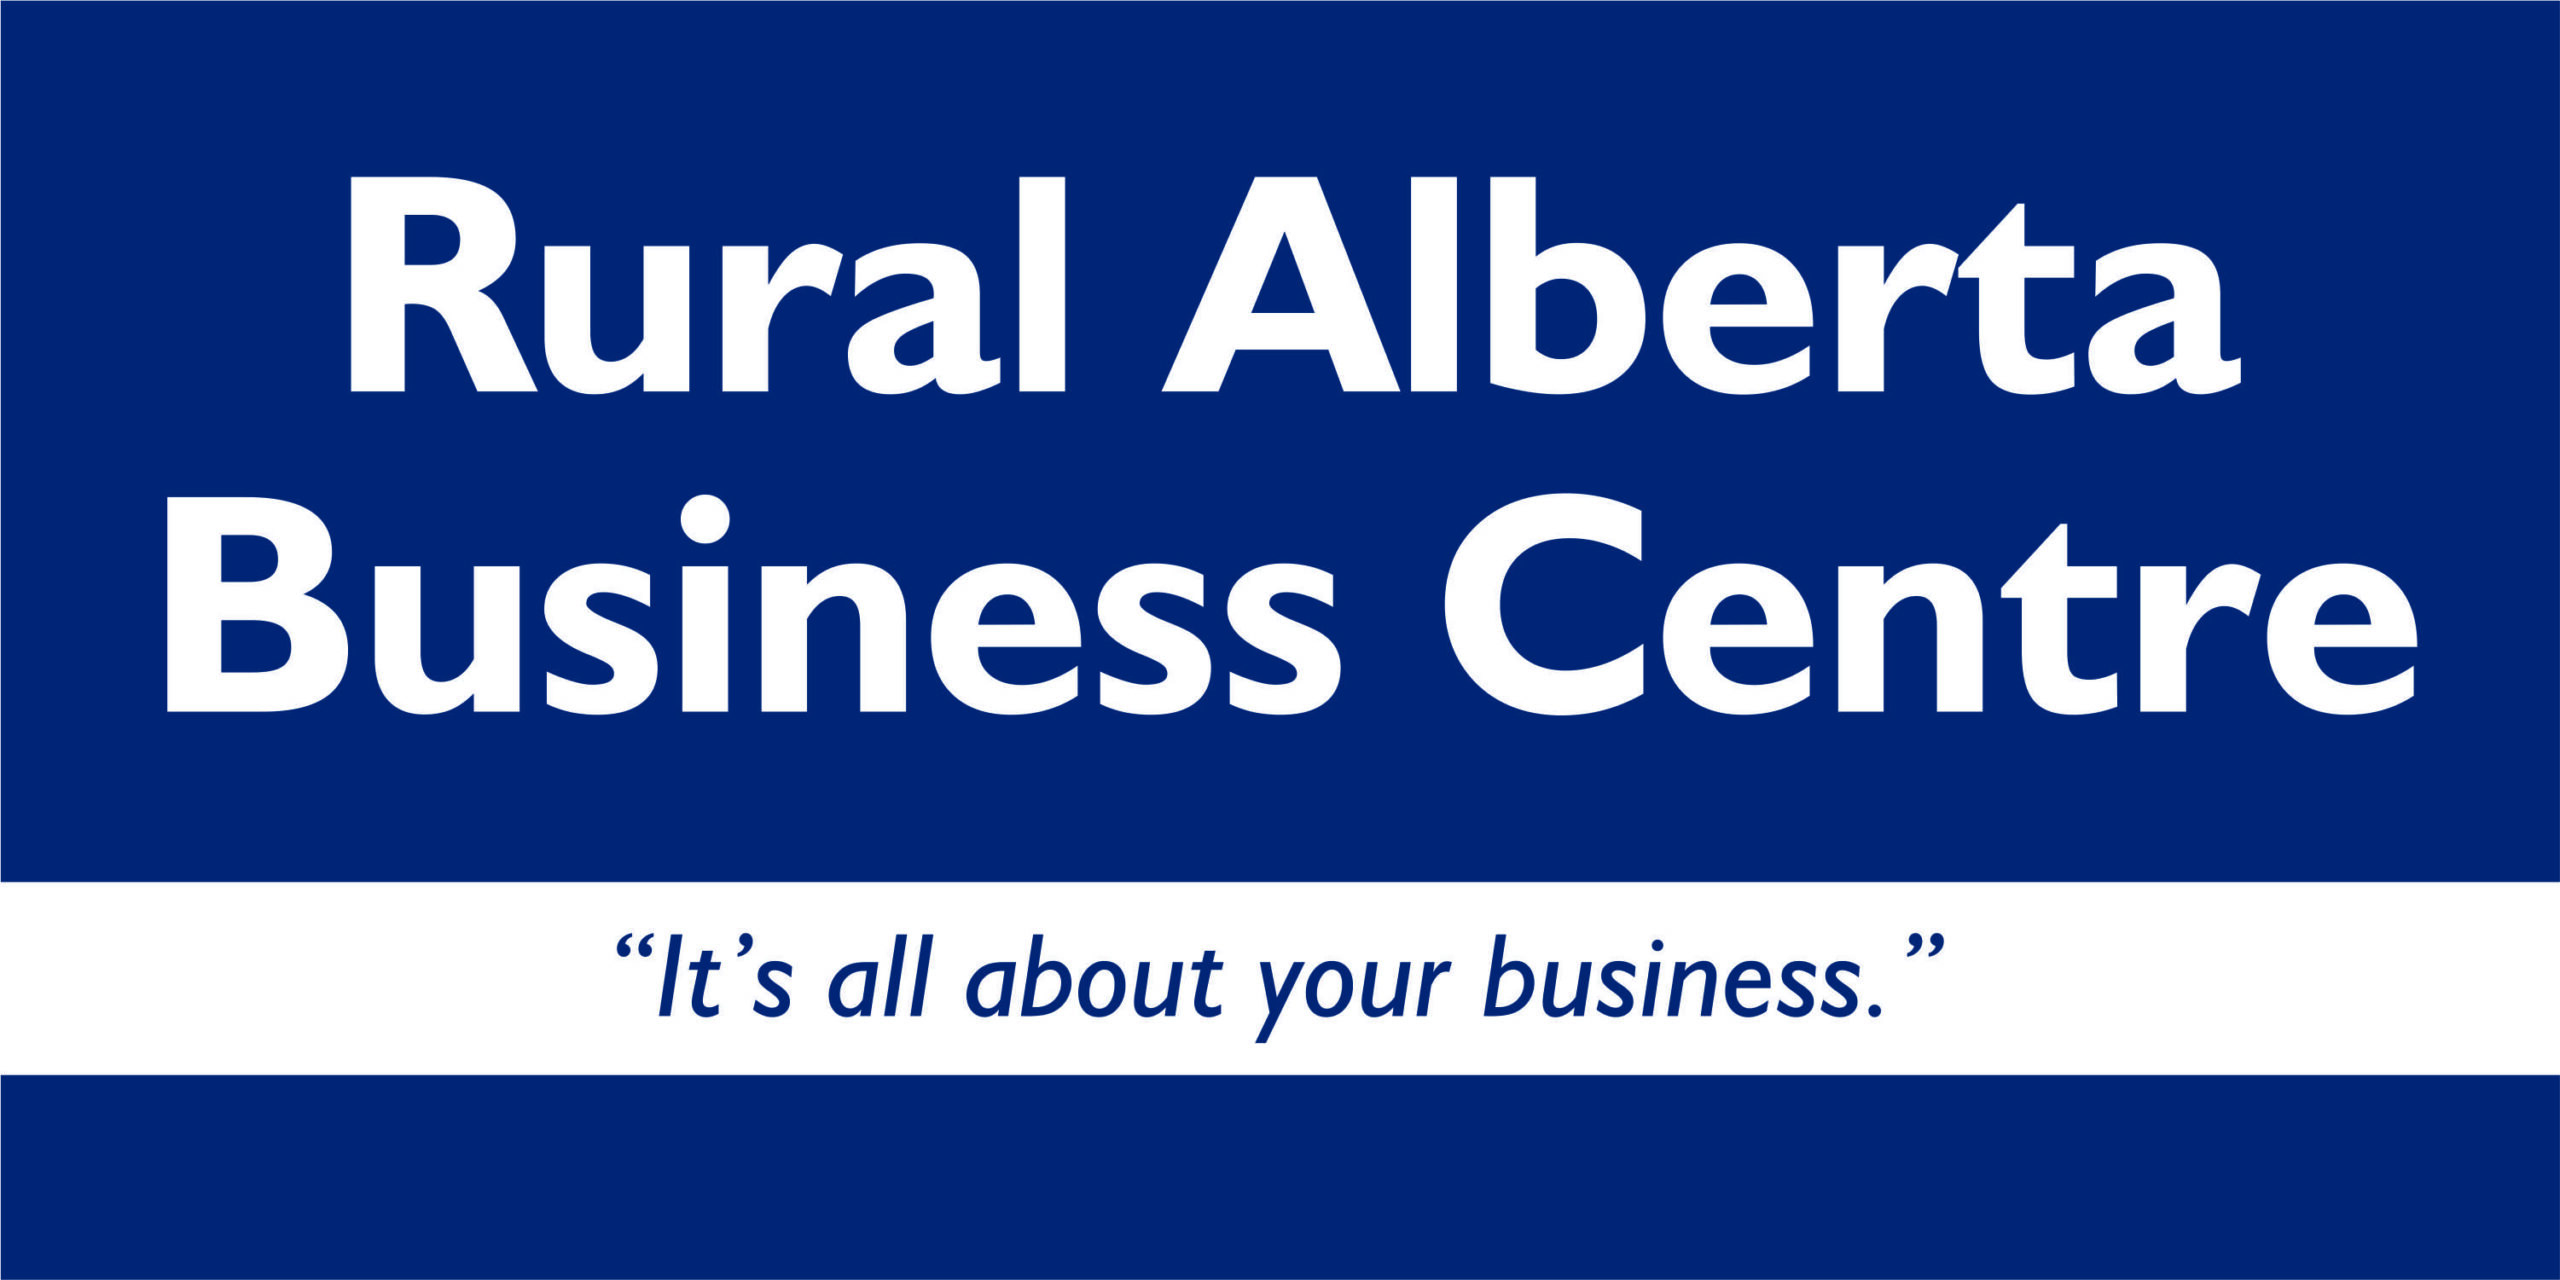 Rural Alberta Business Centre